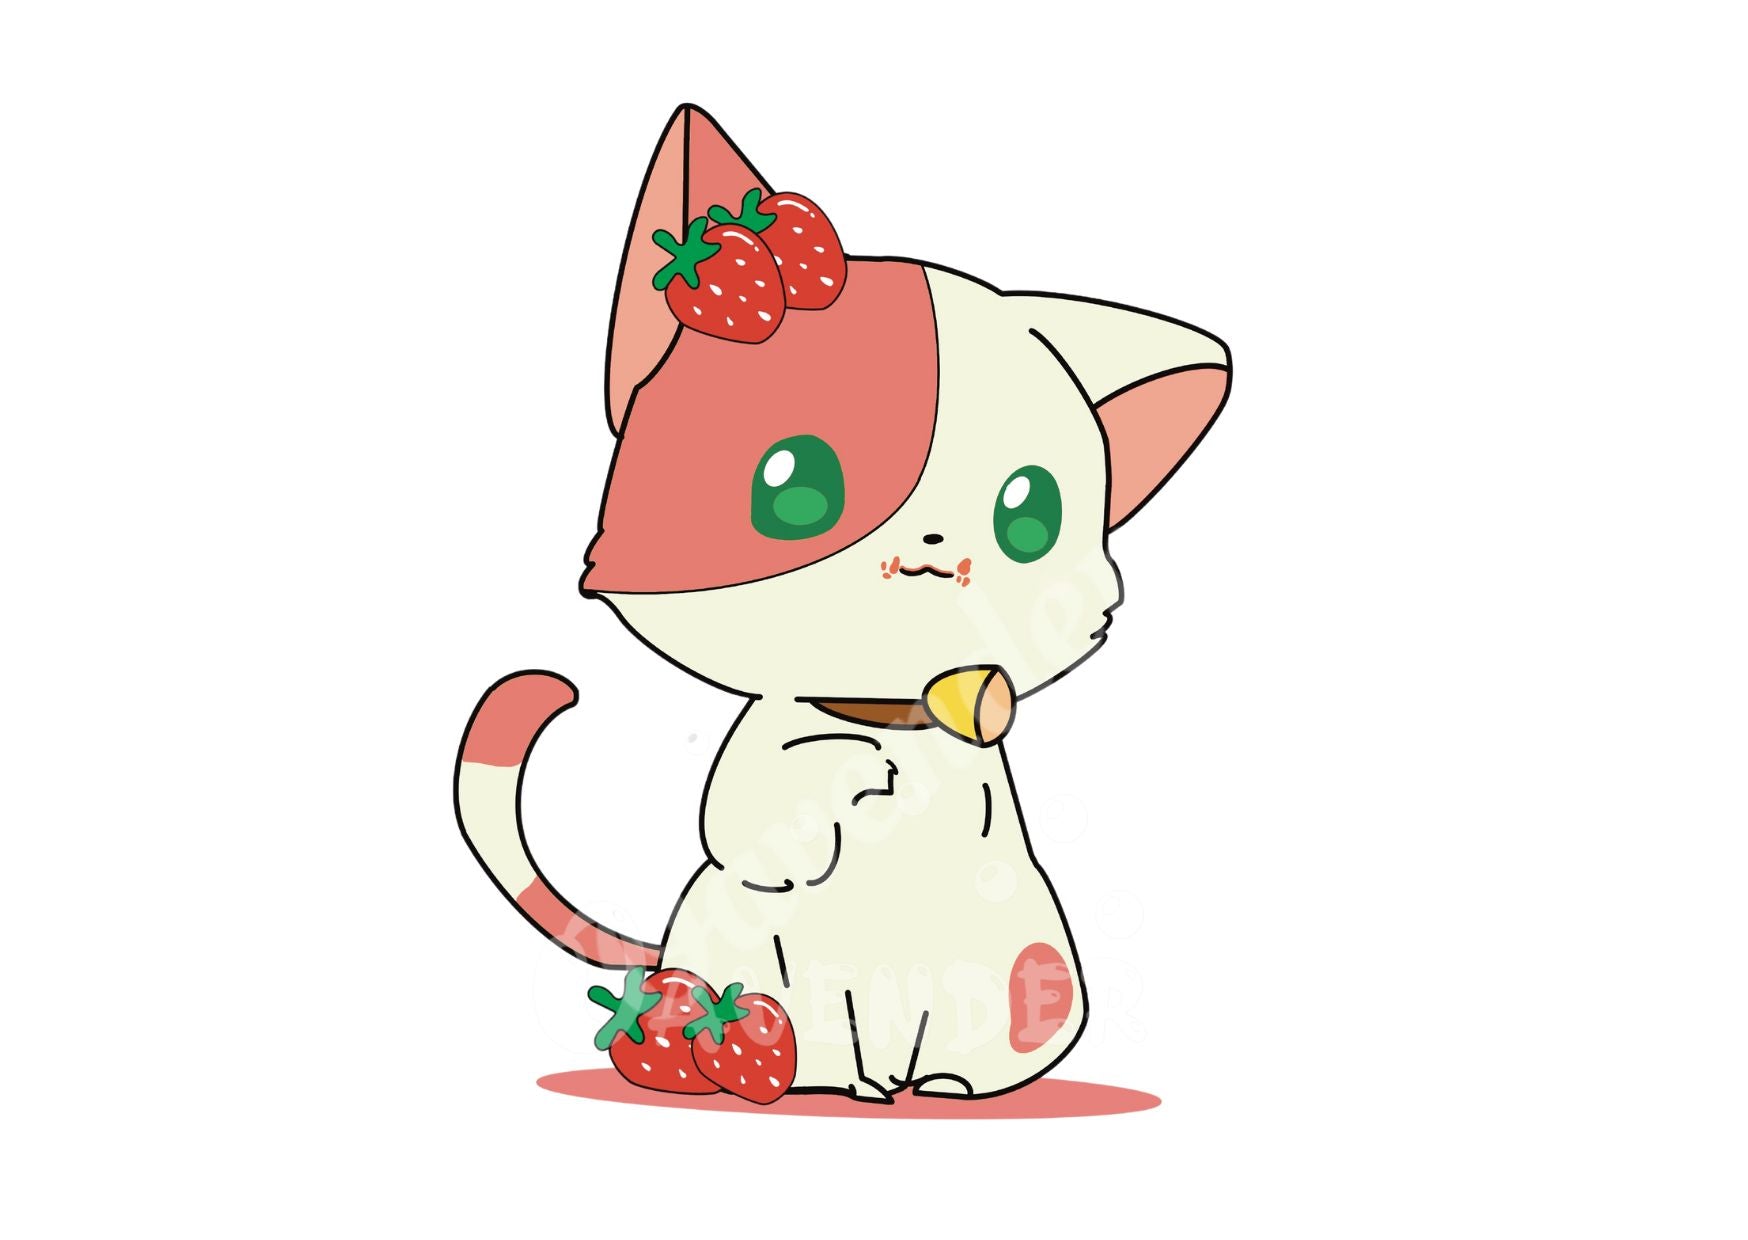 Cute Cat Stickers, Kitty stickers, Cartoon Cat stickers - Water